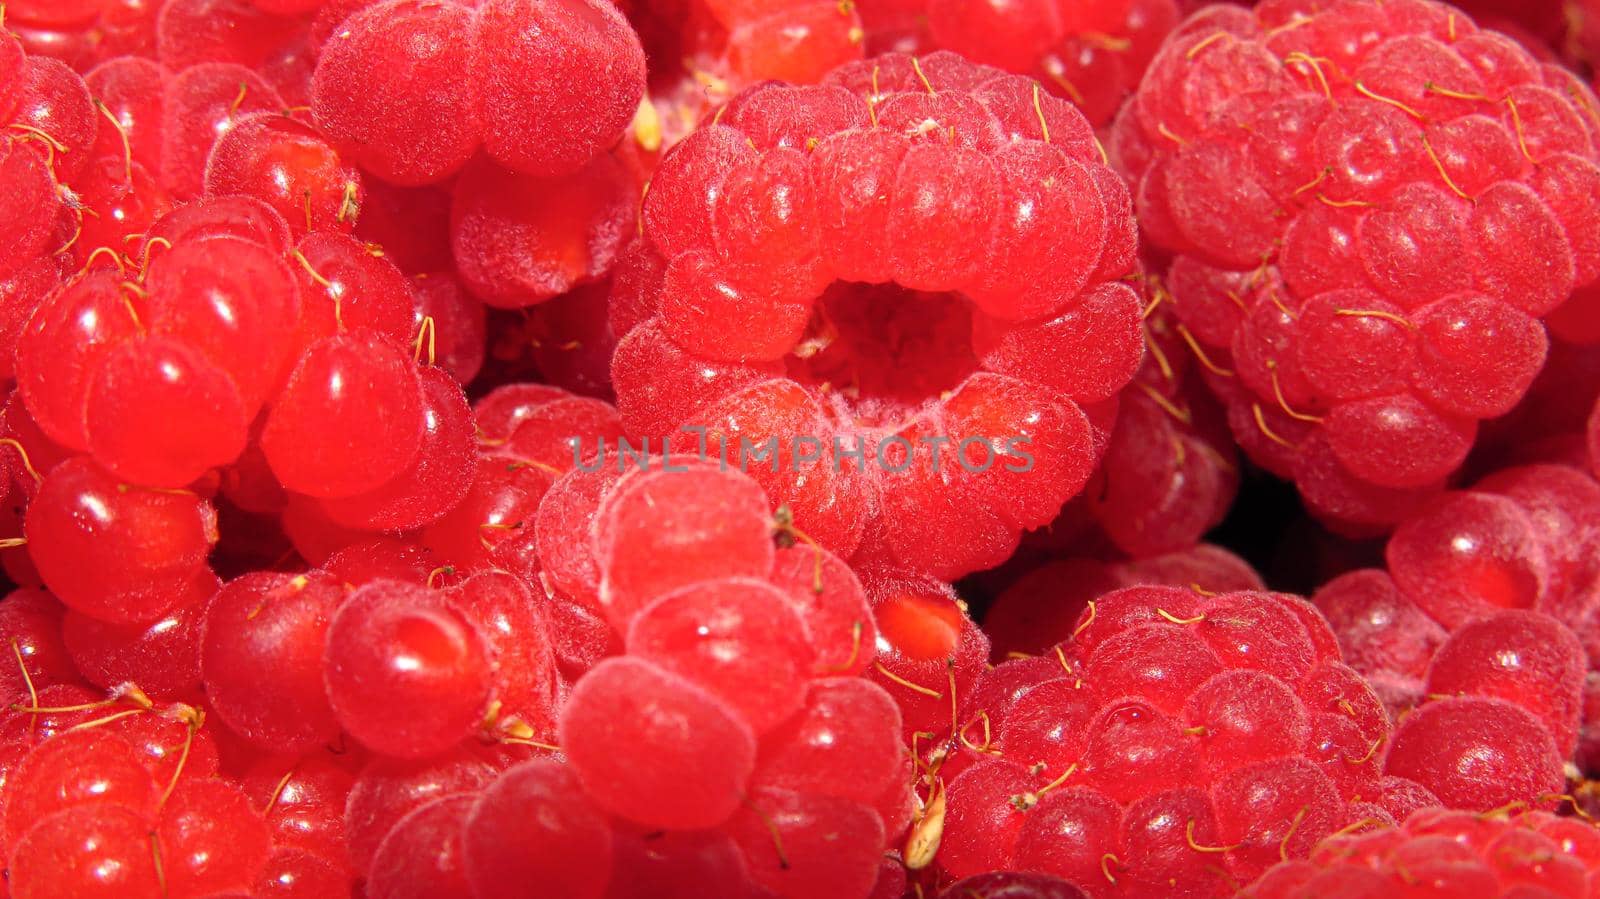 Beautiful raspberries. Texture of fresh ripe raspberries.